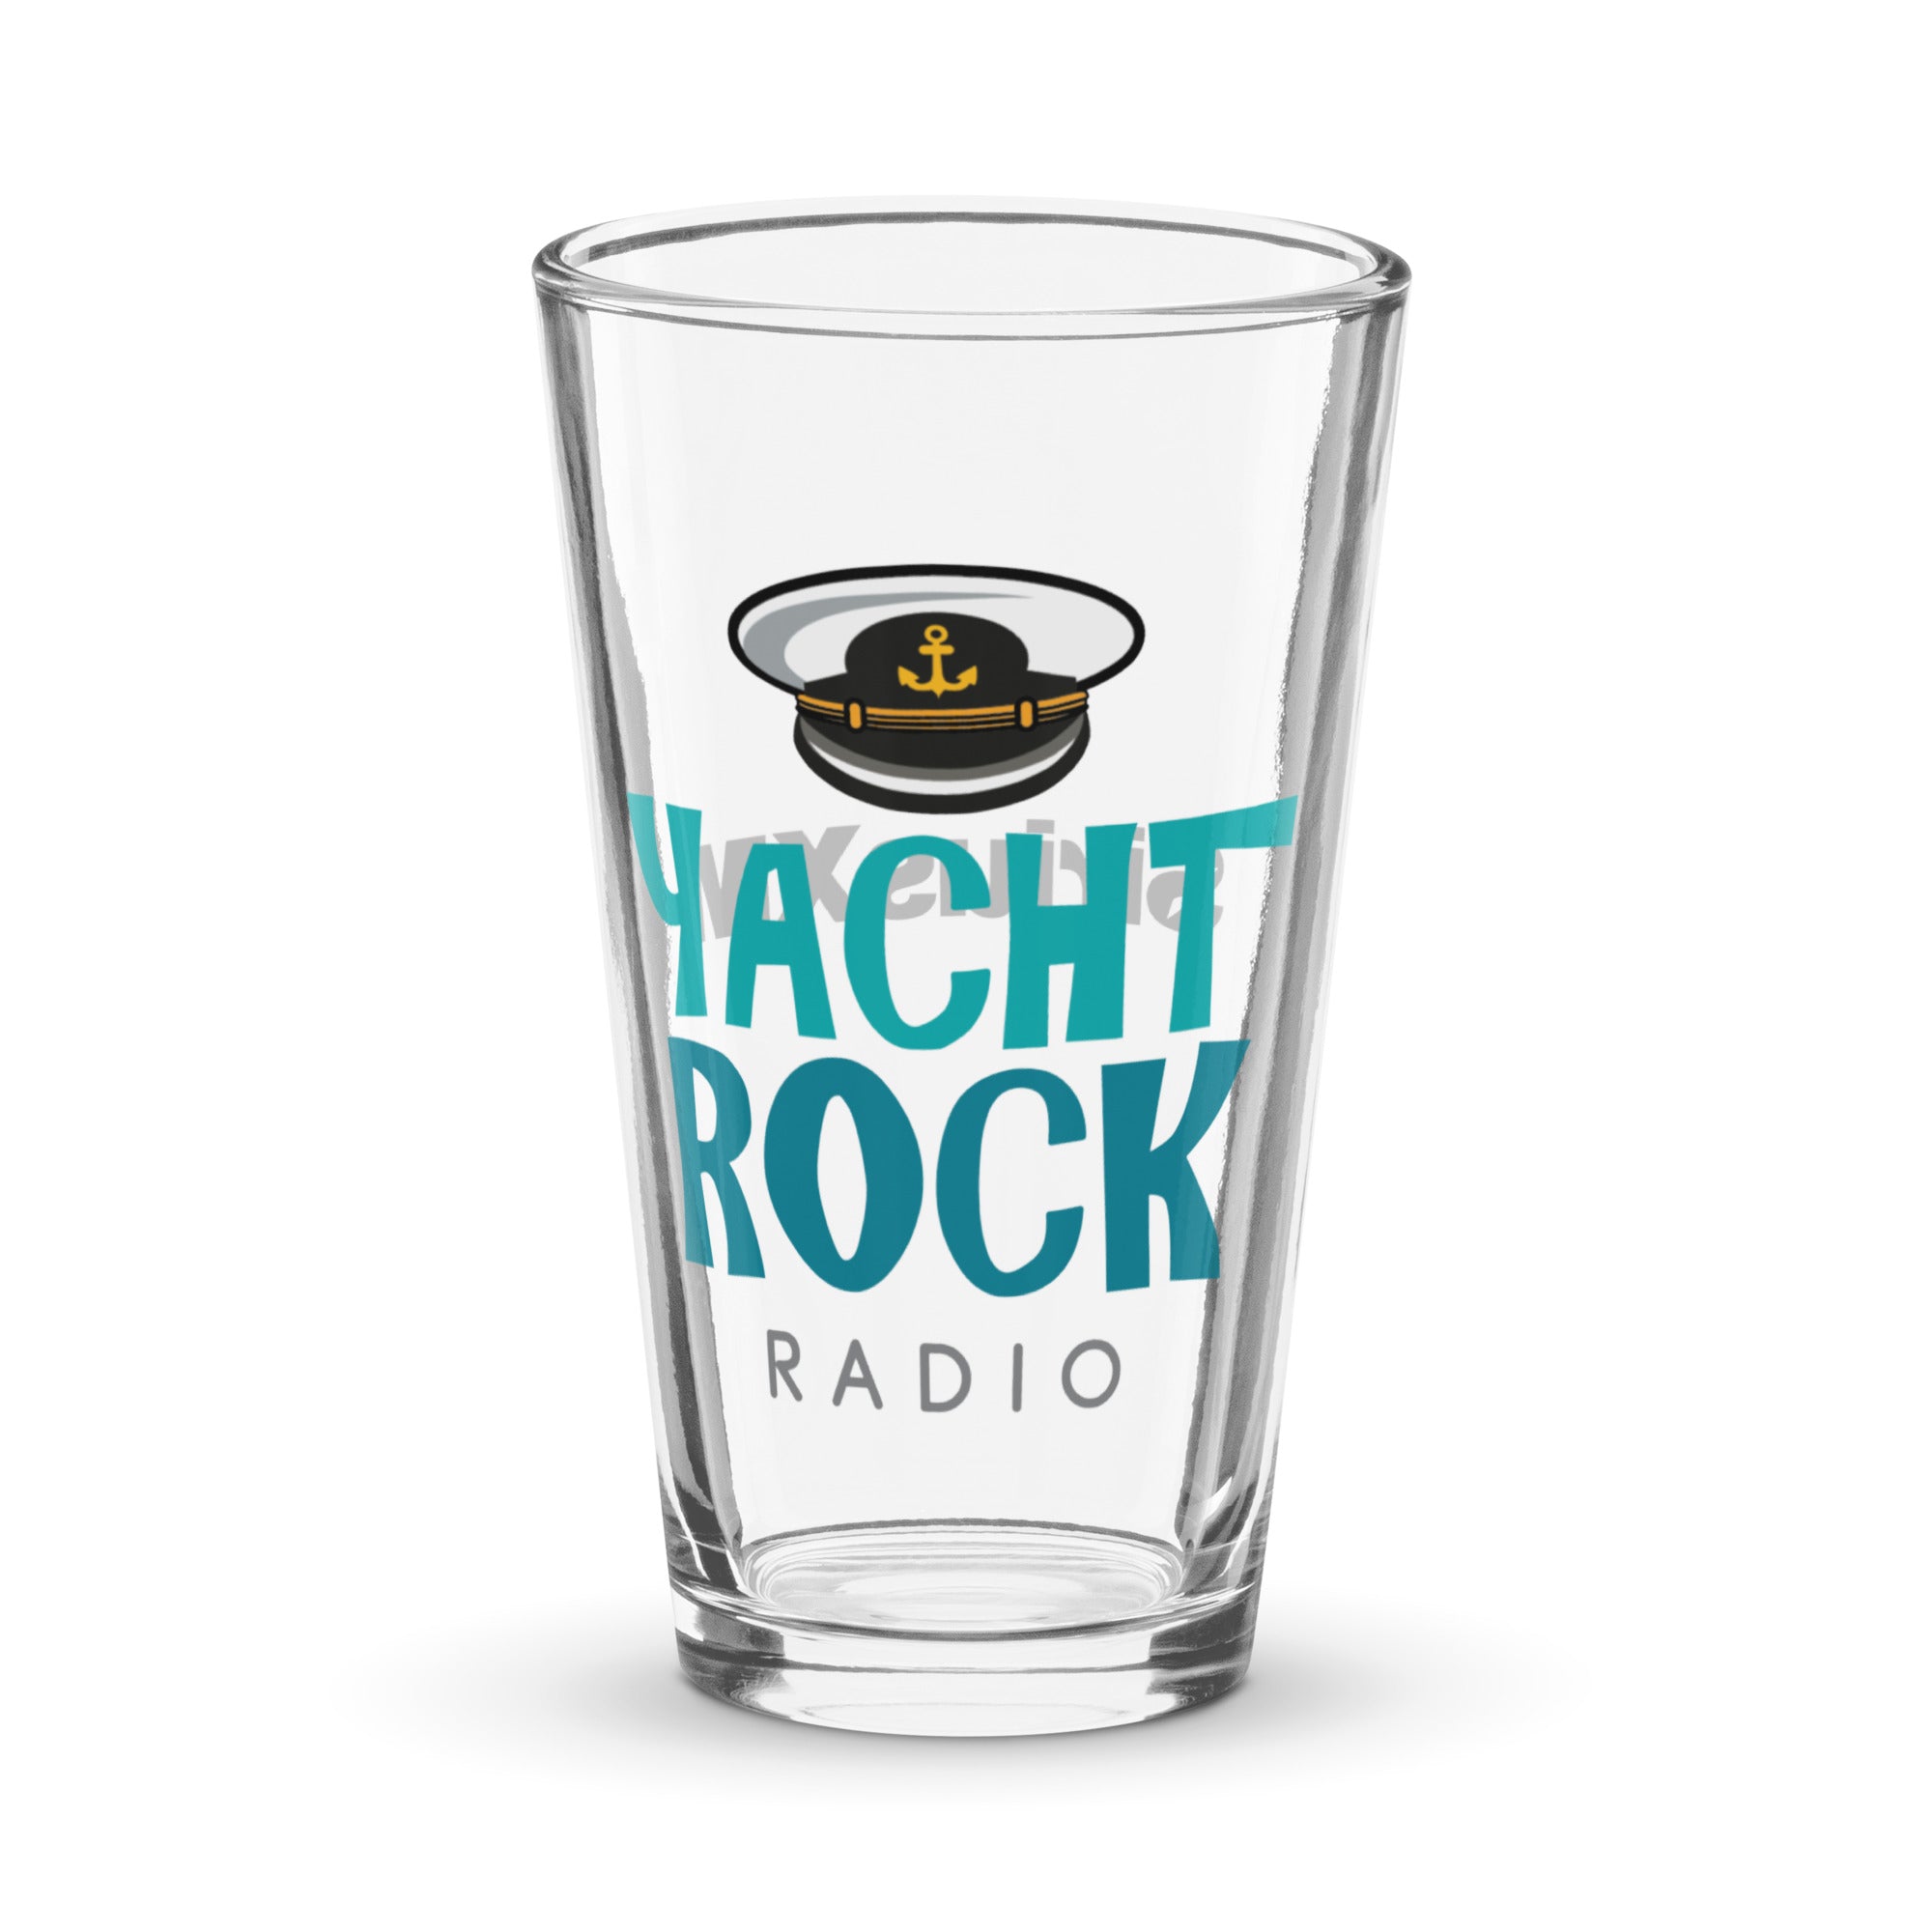 Yacht Rock: Pint Glass